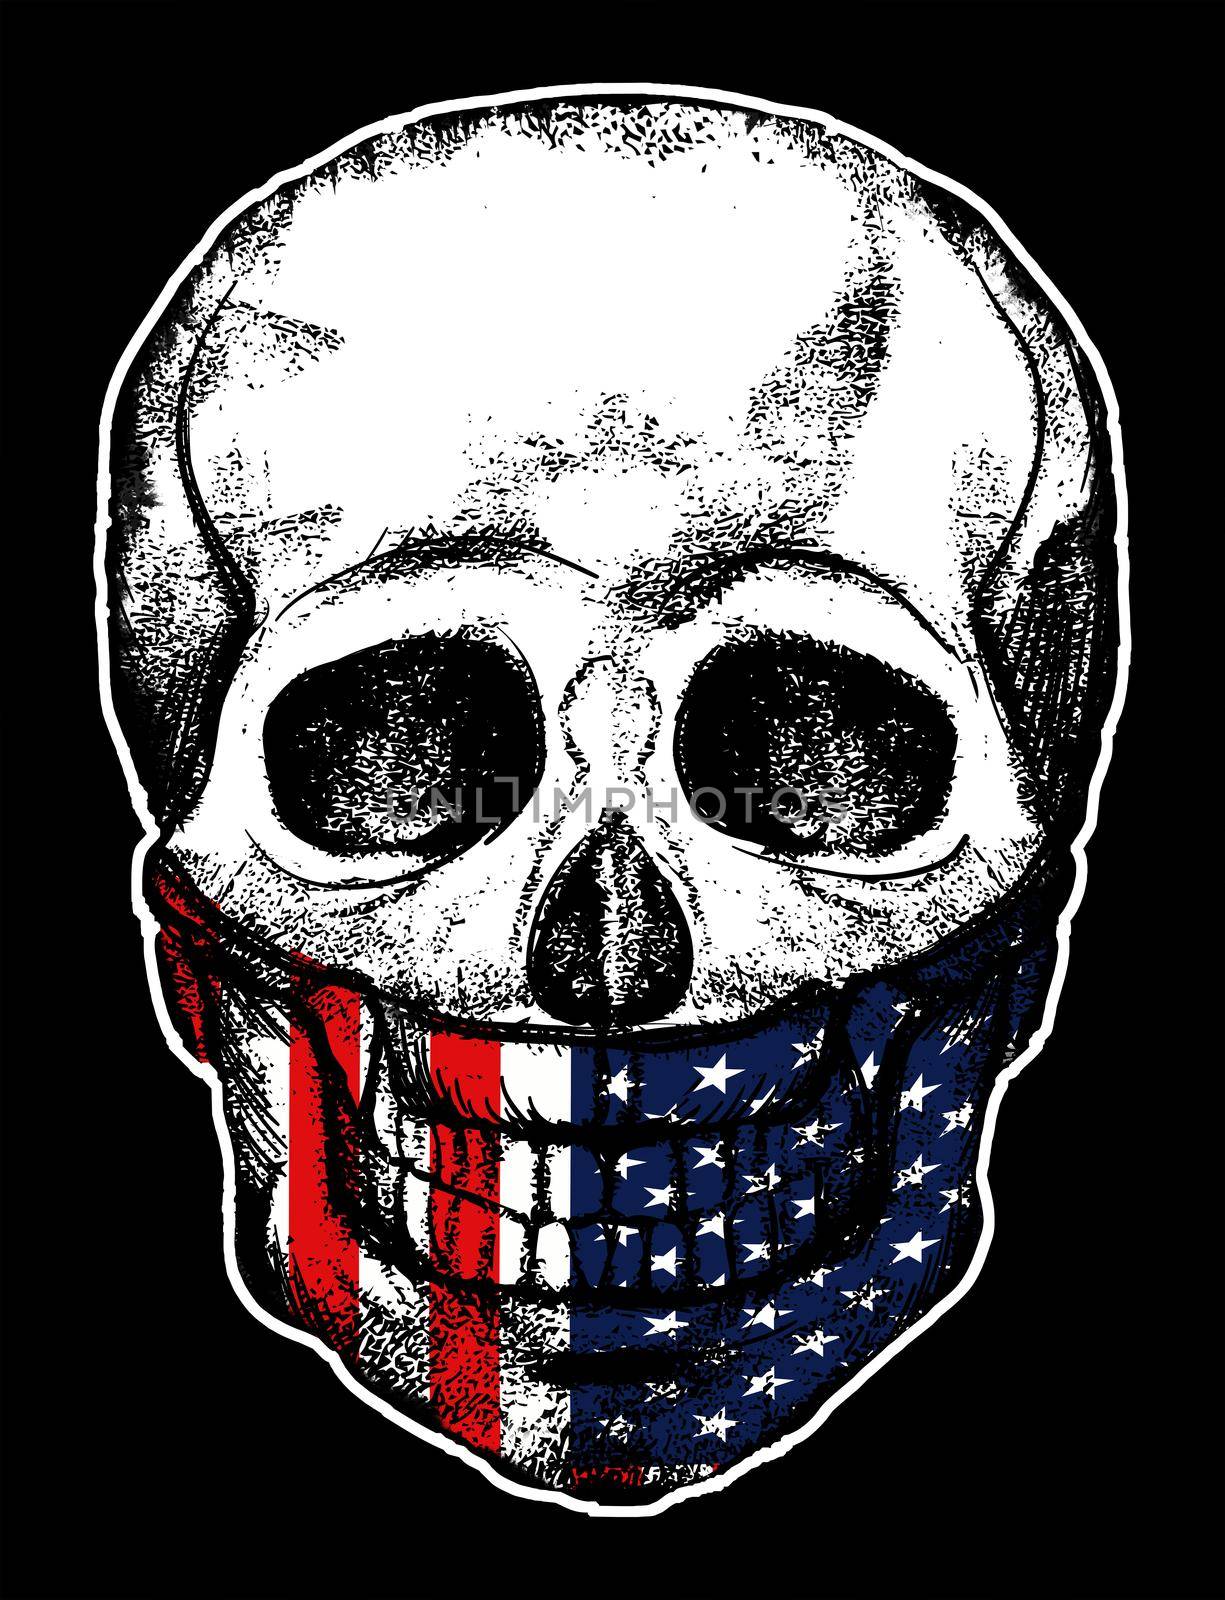 United States Flag Skull illustration on a black bacground by SlayCer